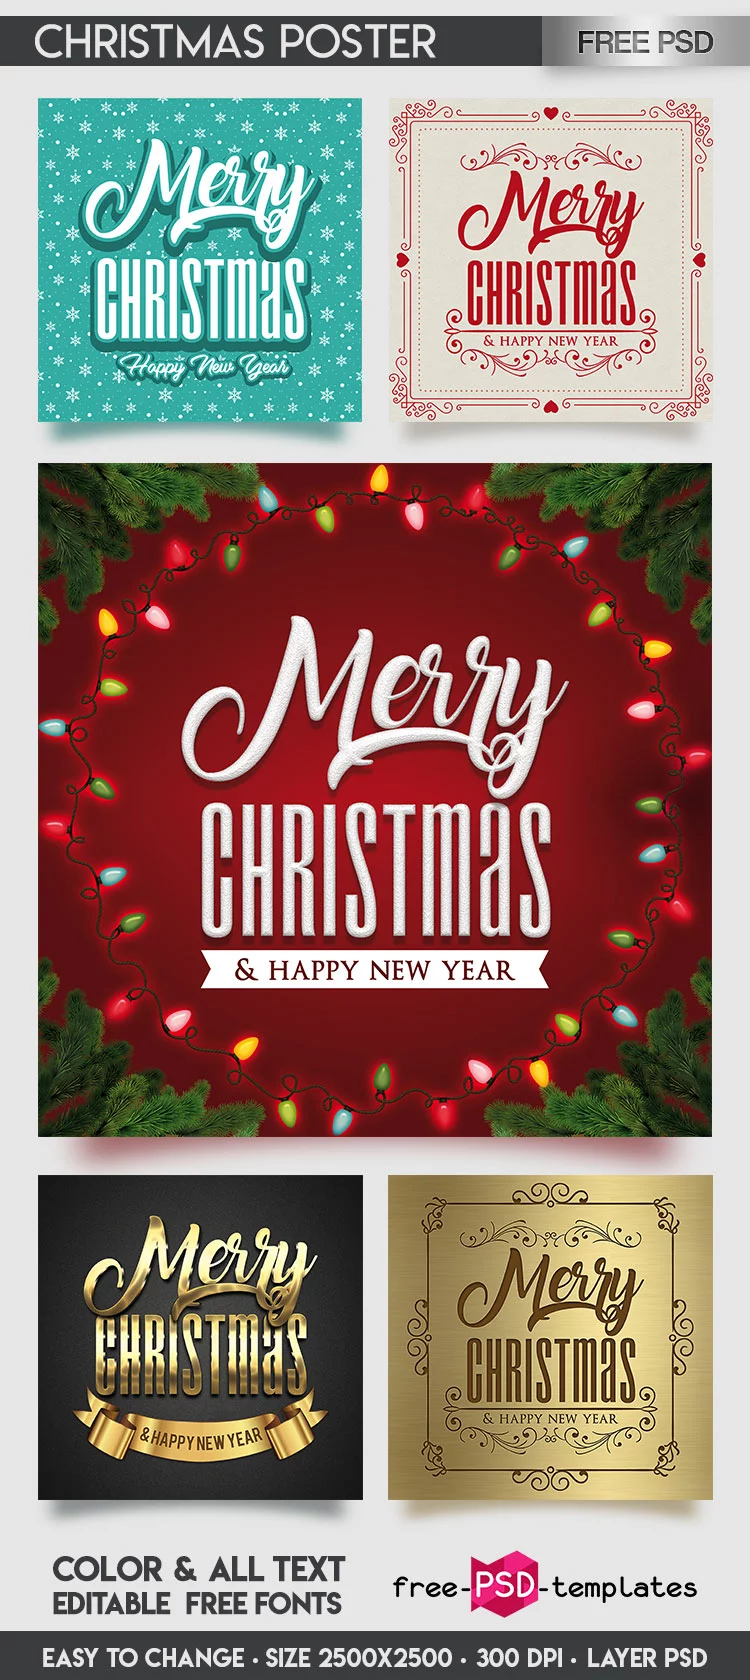 Free Christmas Poster Templates (PSD)